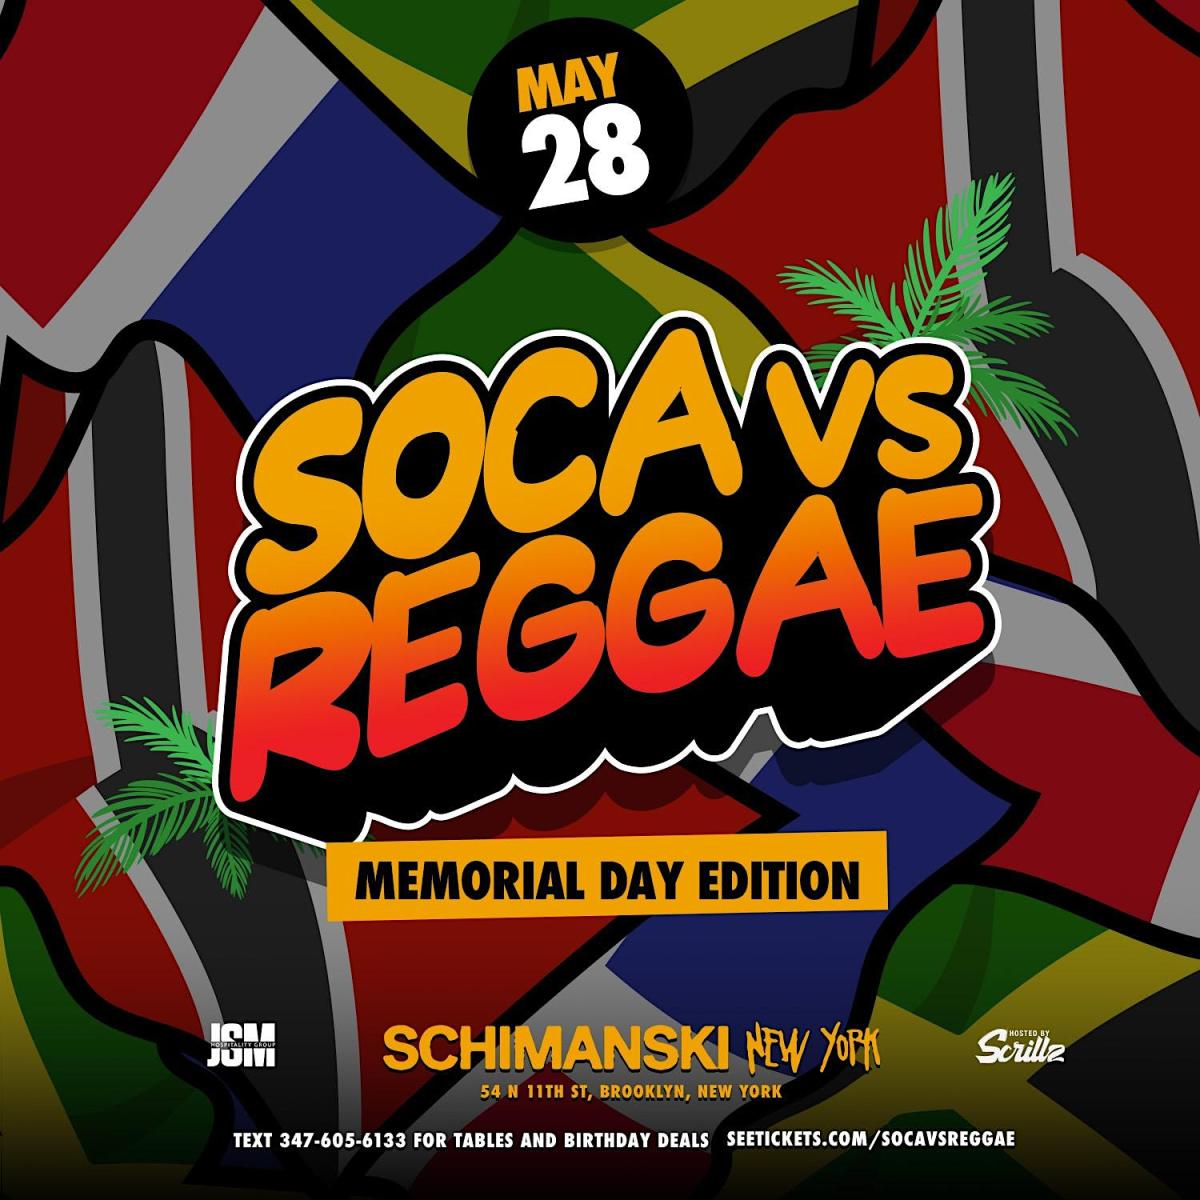 Soca Vs Reggae : Memorial Day  Edition flyer or graphic.